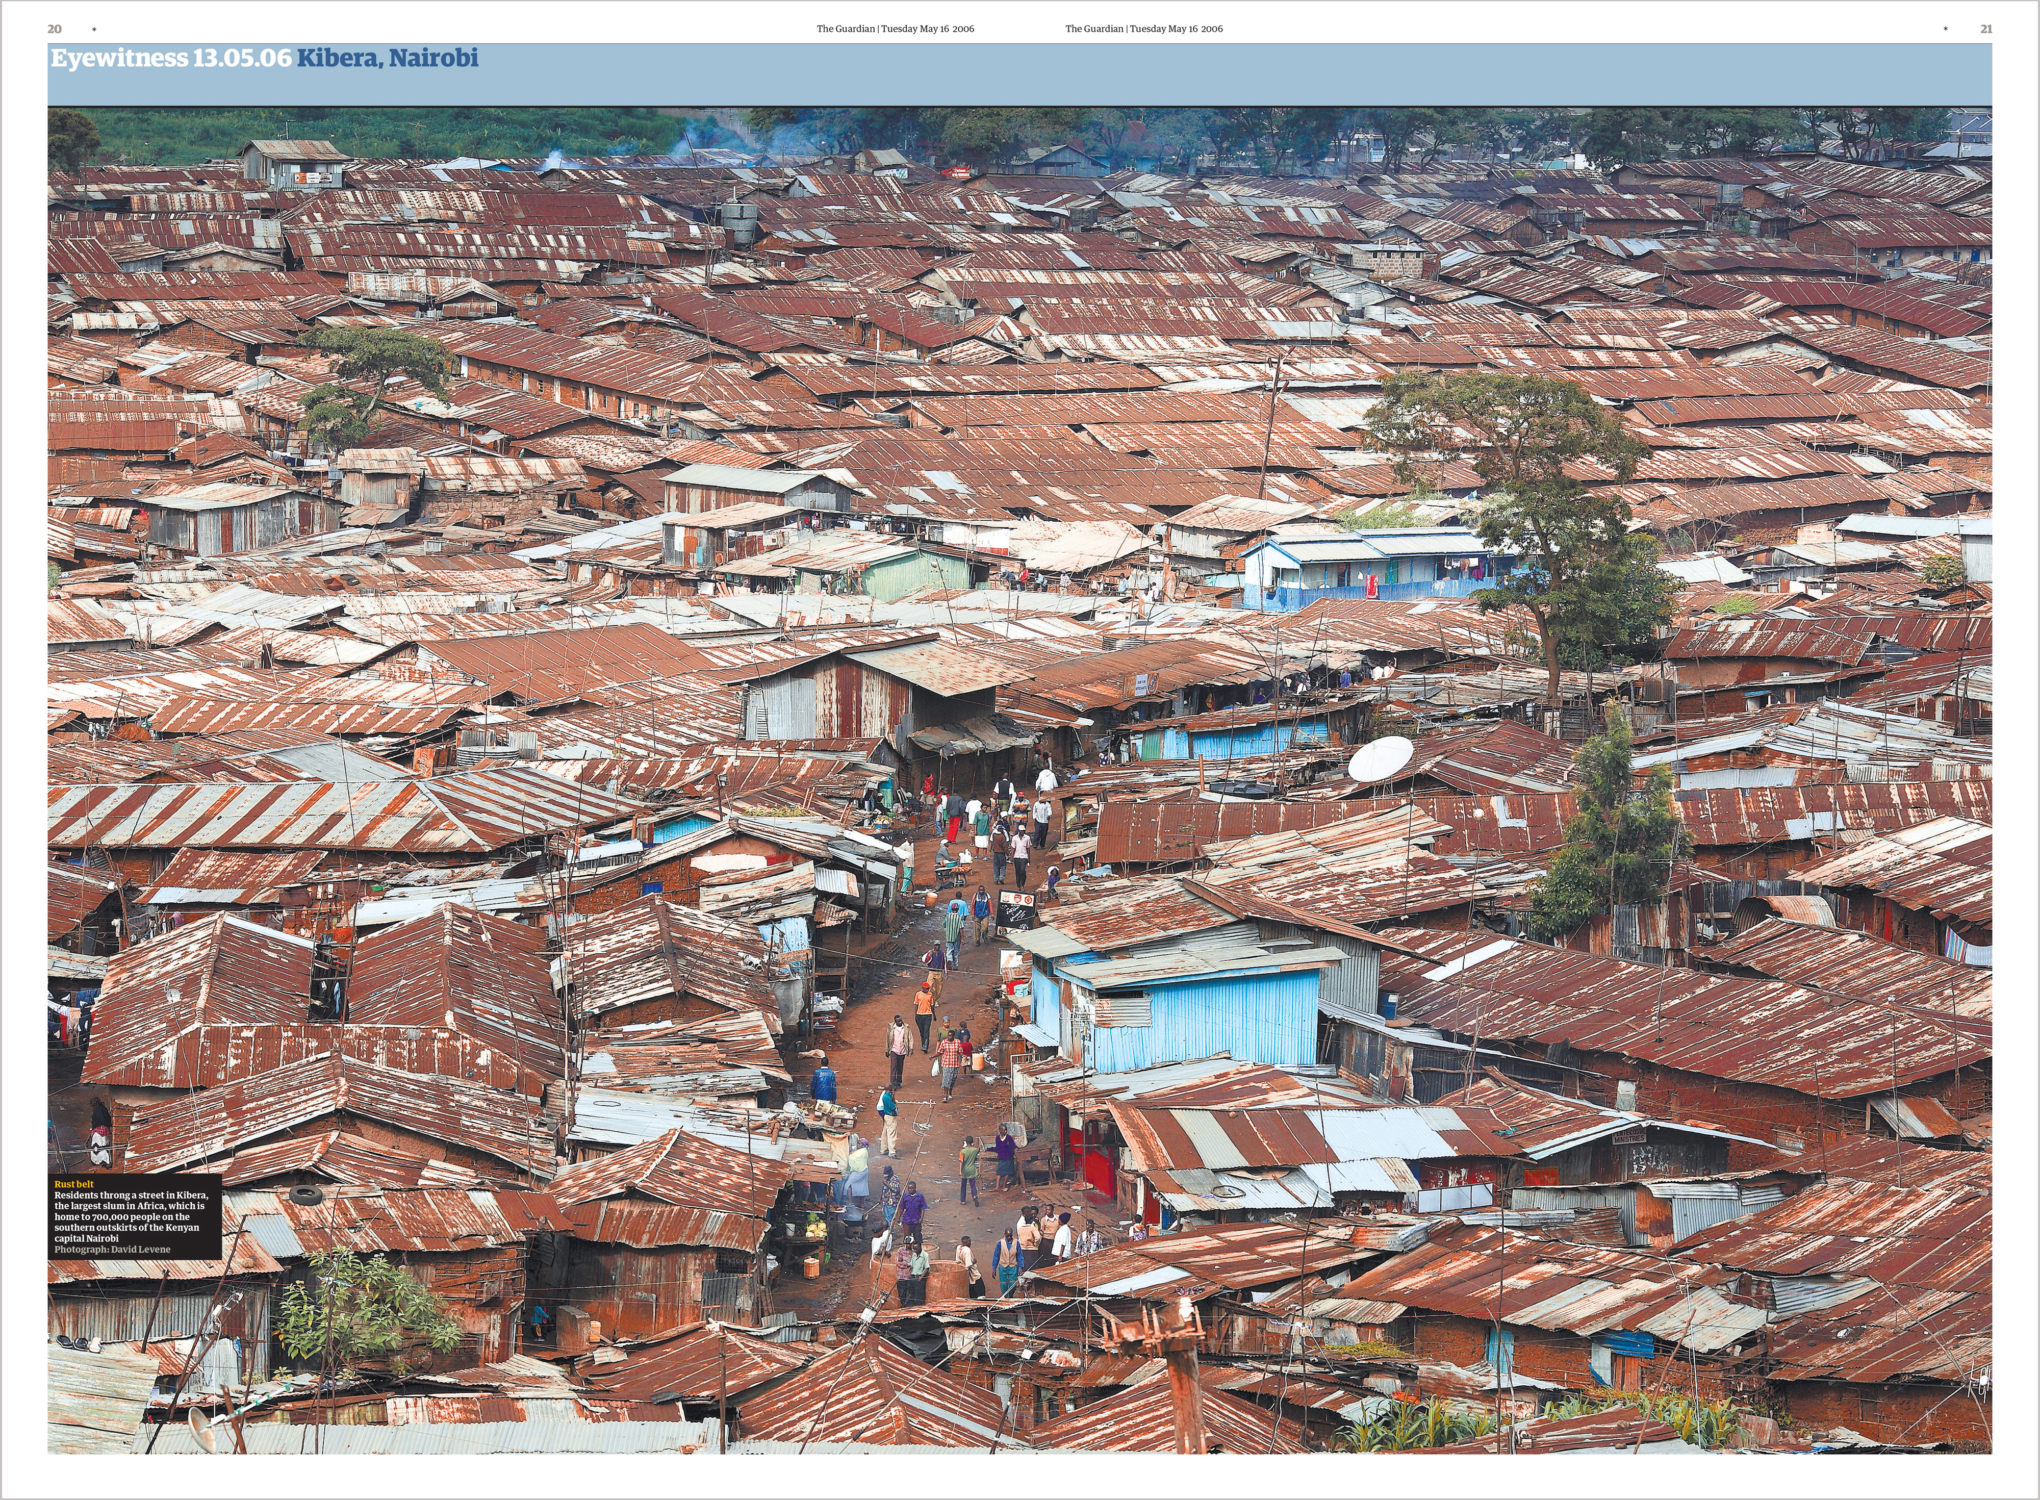 Kibera Slums, Nairobi, David Levene Photography